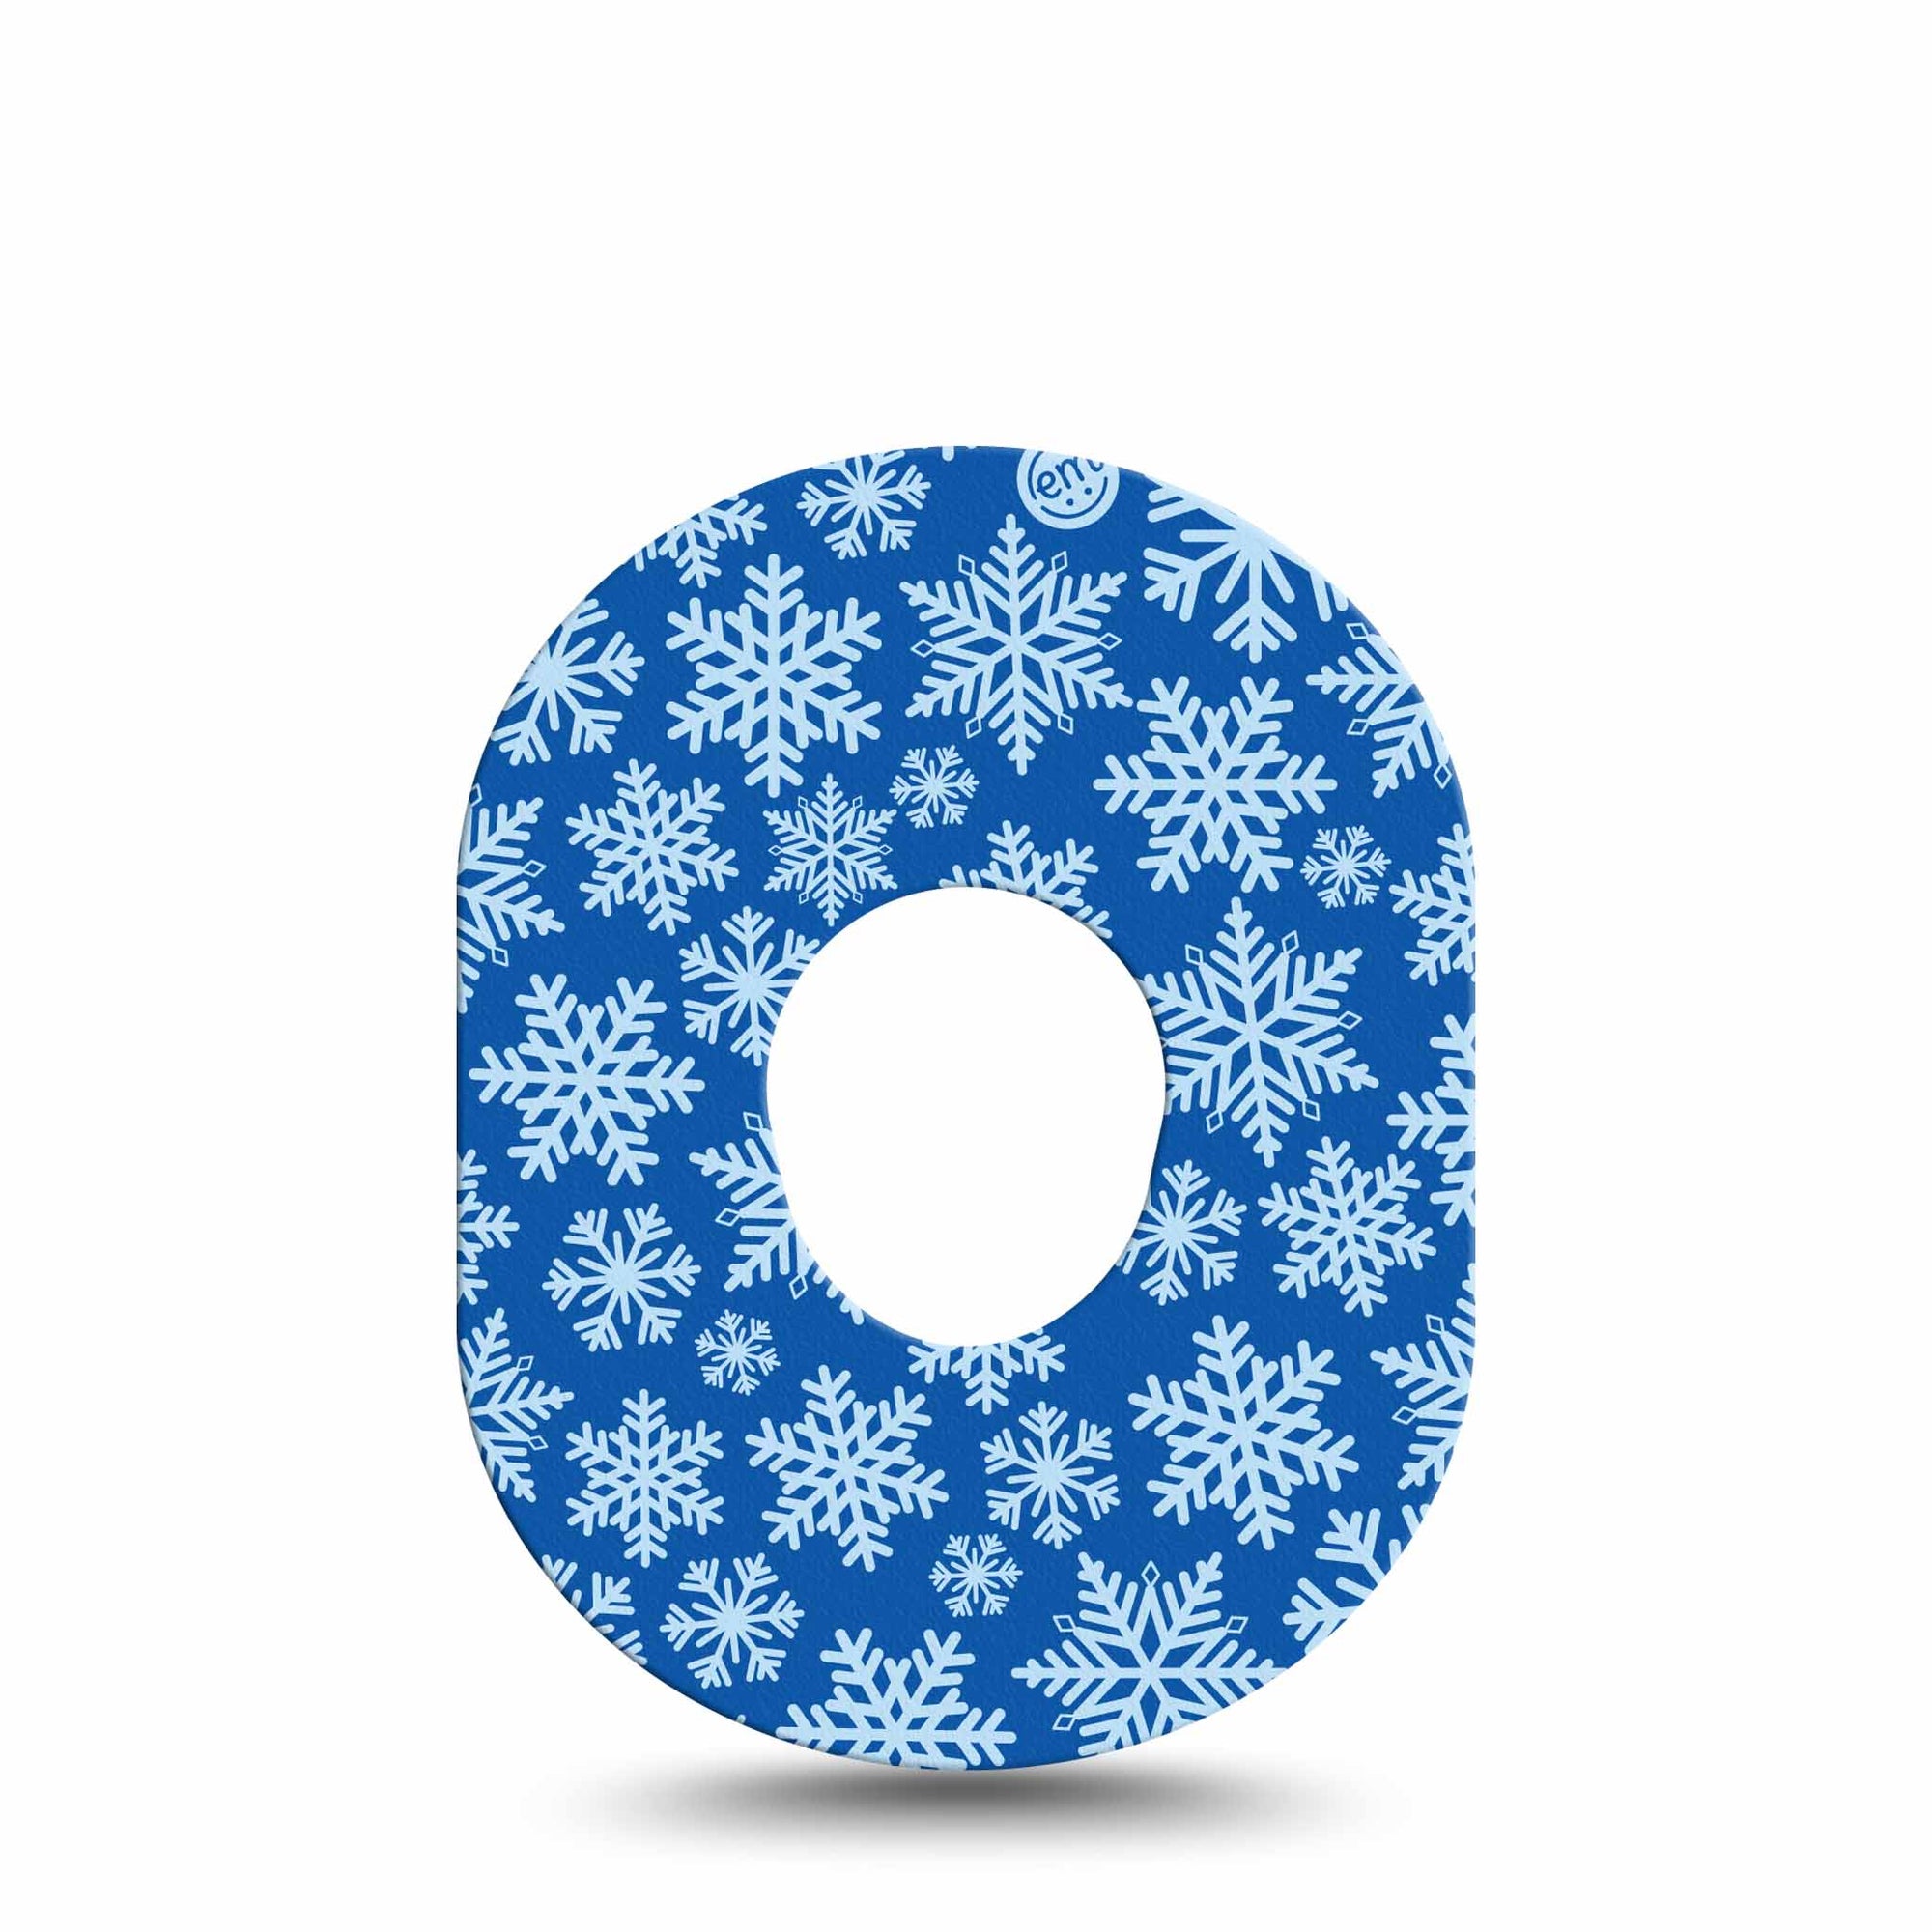 ExpressionMed Snowflake Dexcom G7 Tape, single, Blue Theme Snowflakes CGM Adhesive Patch Design, Dexcom Stelo Glucose Biosensor System